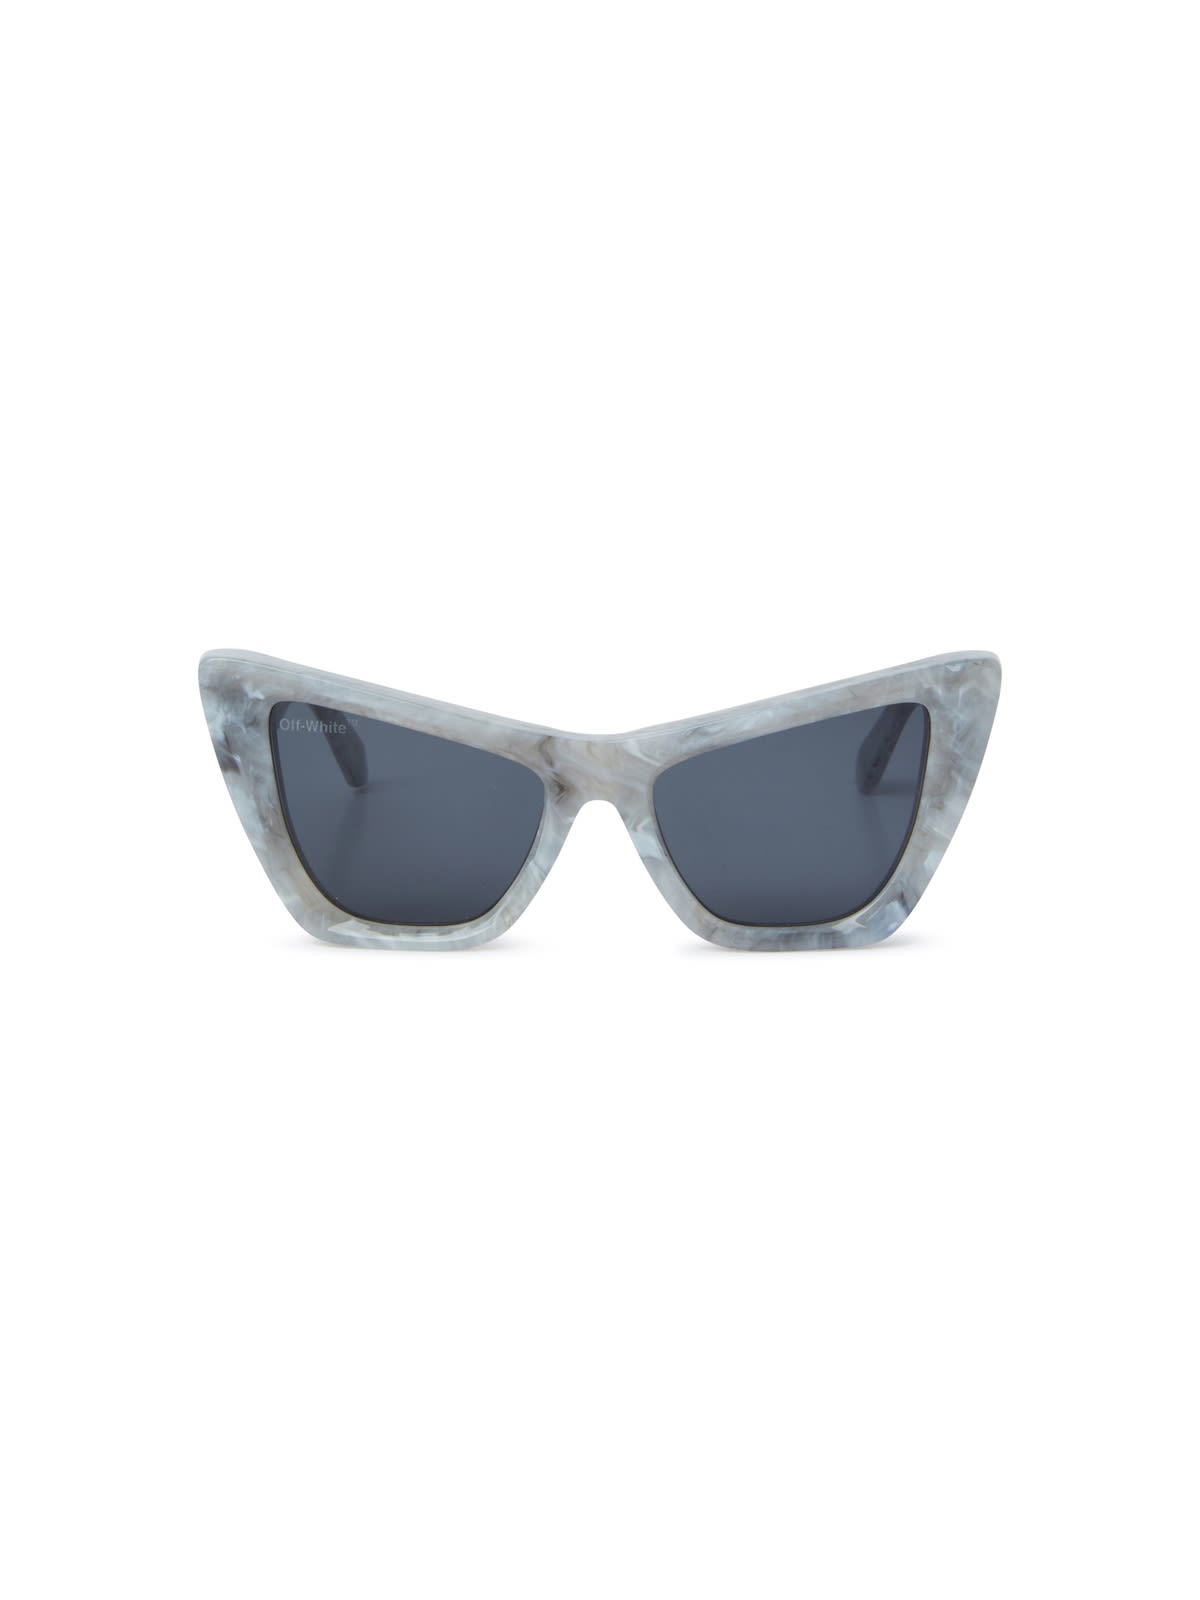 Off-White EDVARD SUNGLASSES Sunglasses